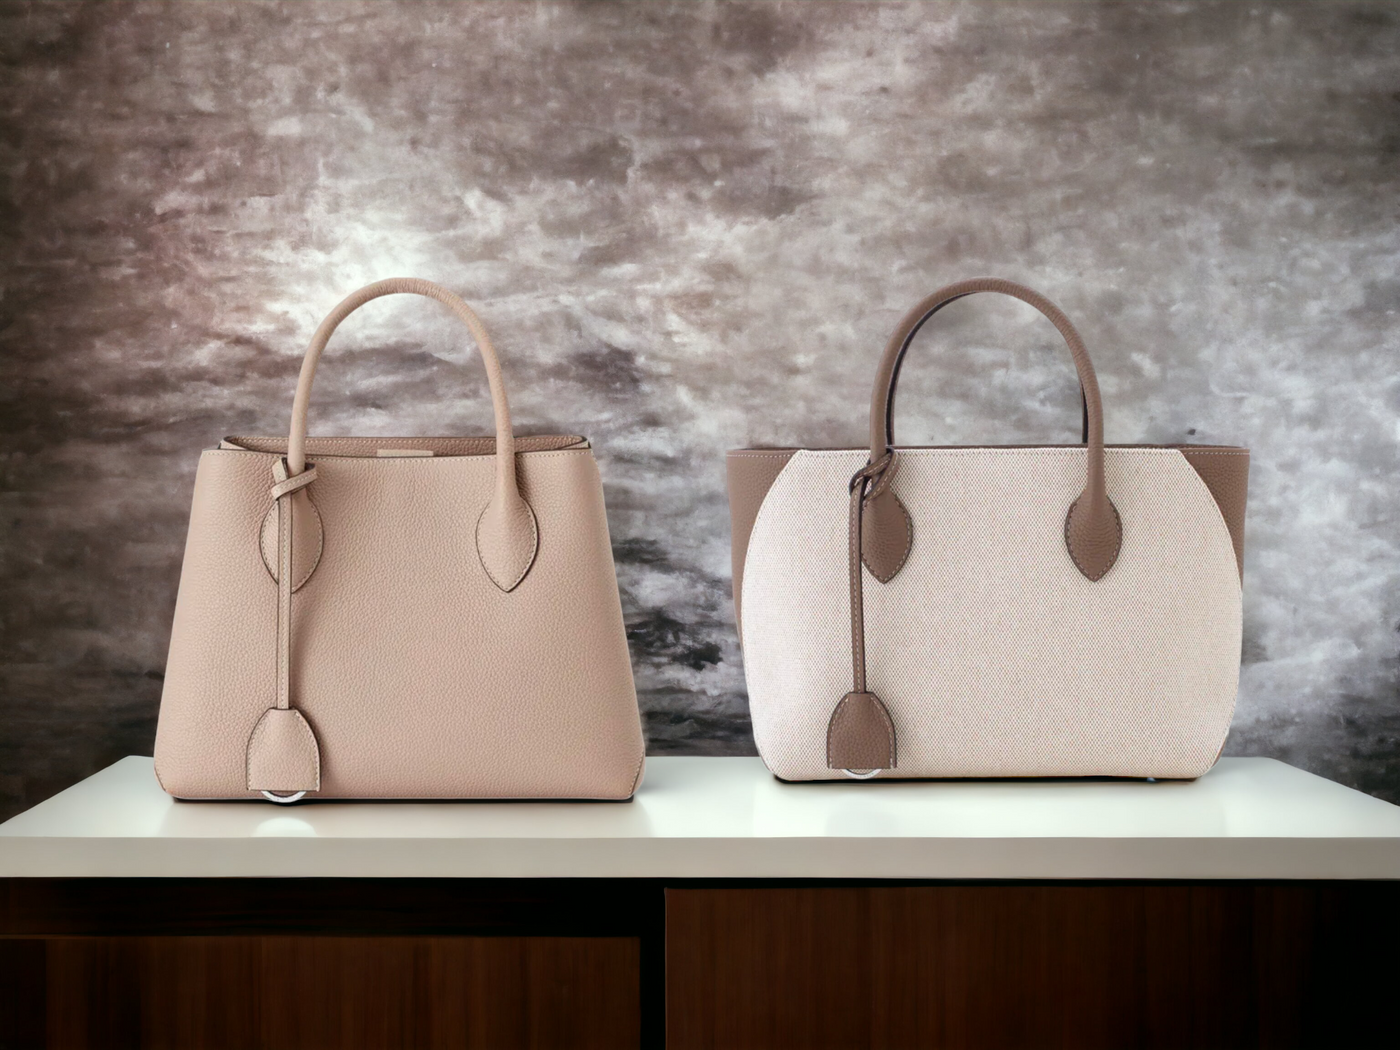 Boat Shape Cash Holder, Wallet, Leather Purse, Trendy, Latest, Fashion  Clutch, Handbag( Dark Brown) | Bag For Woman